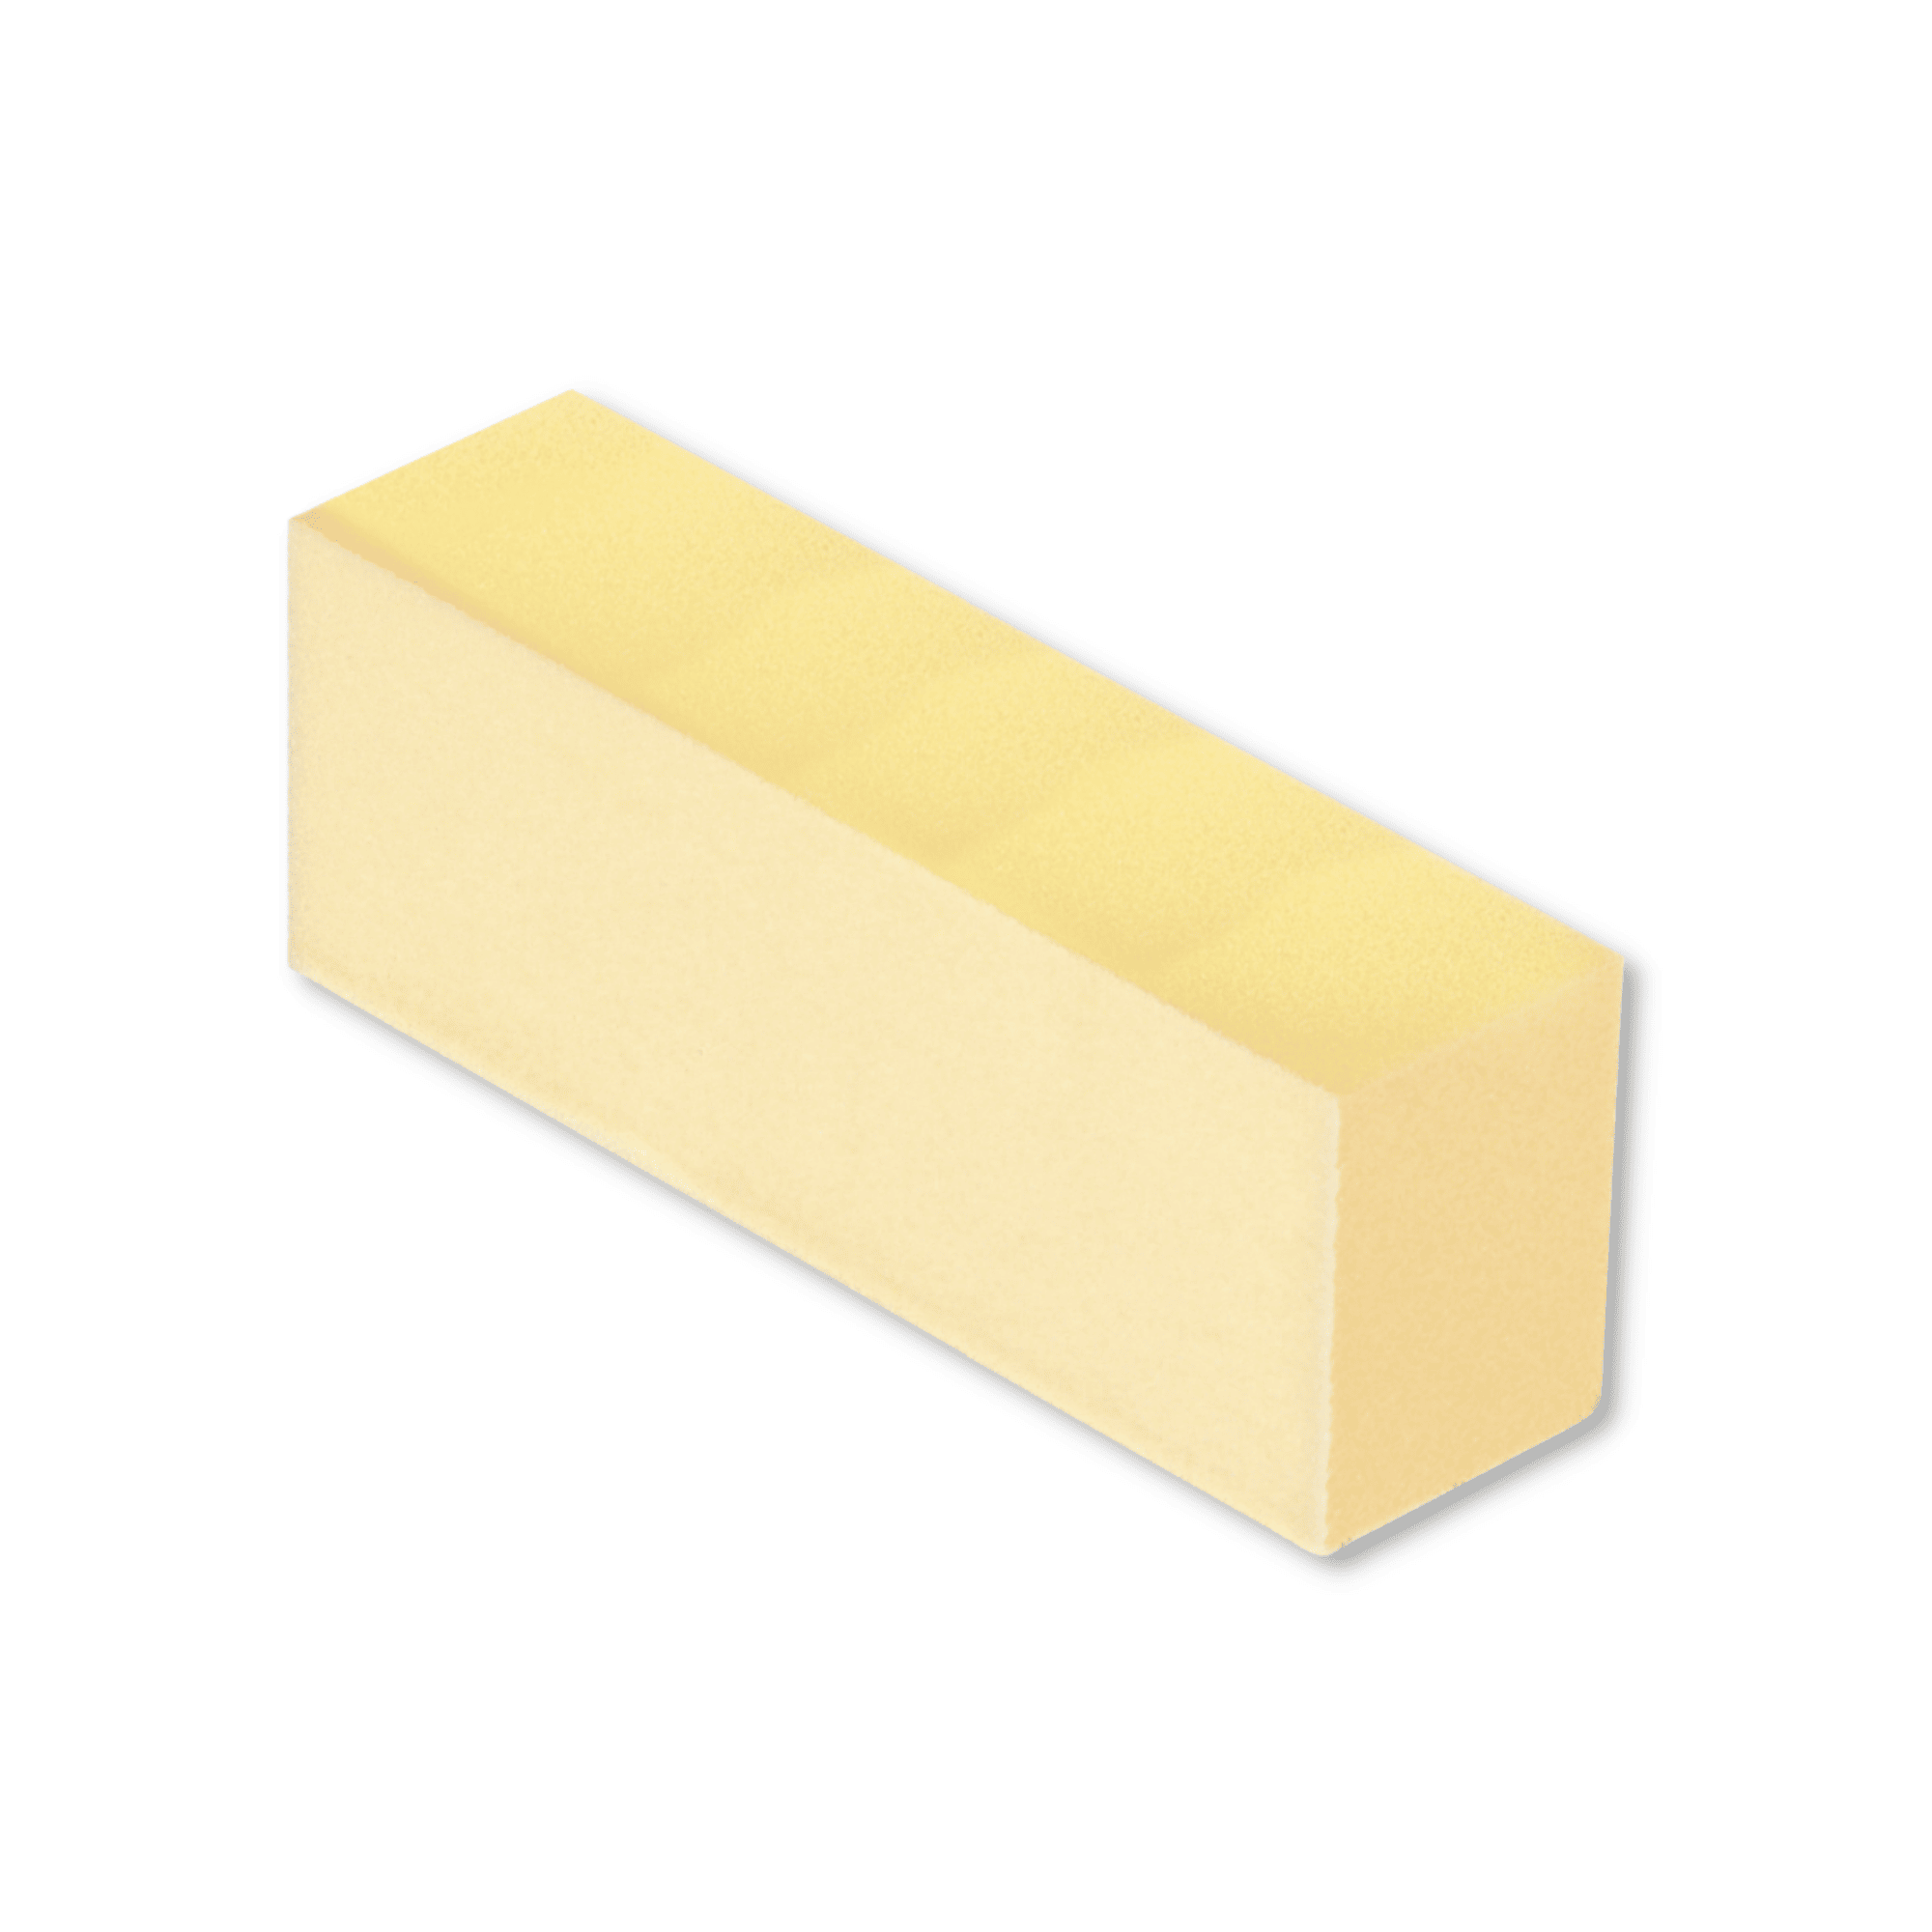 Cuccio Pro Yellow Softie Block - 400 grit